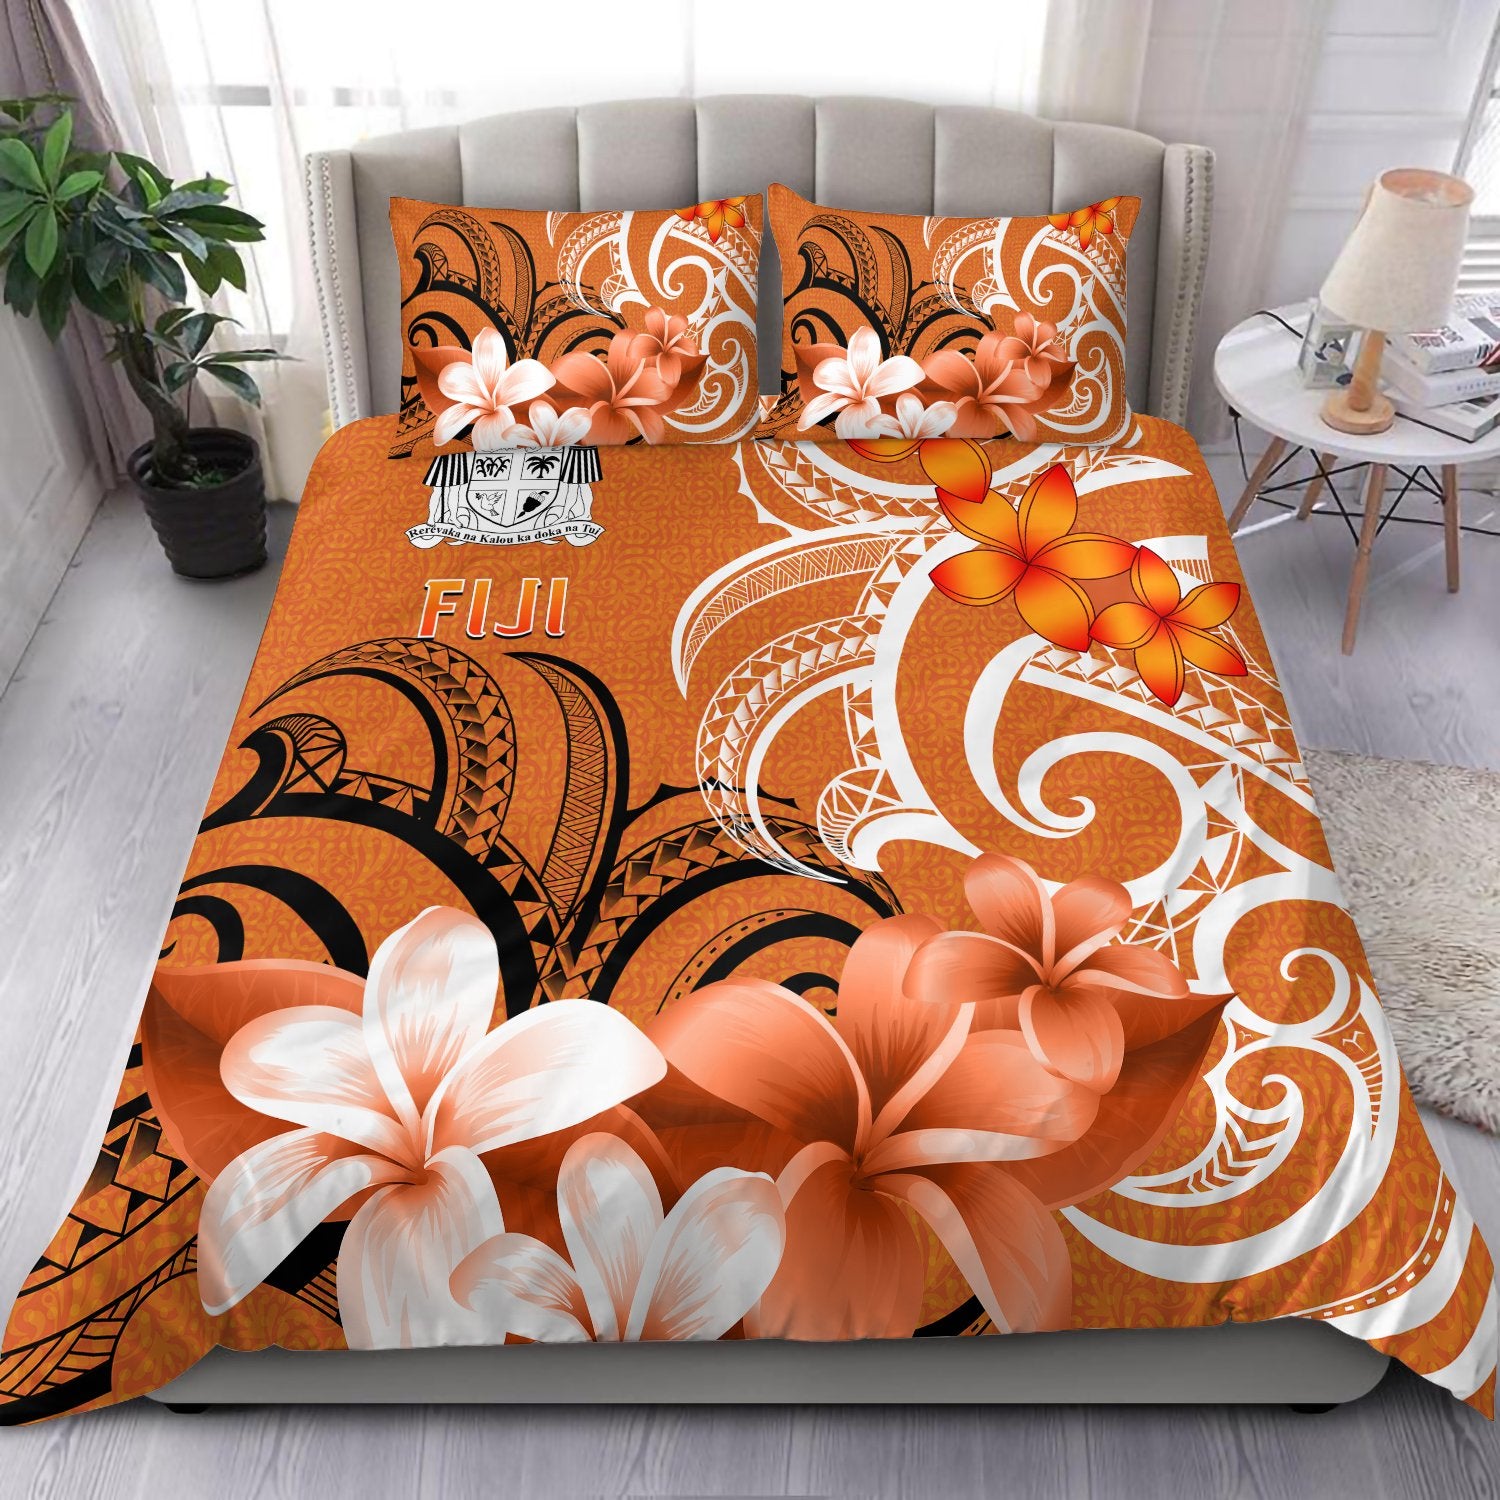 Fiji Bedding Set - Fijian Spirit Orange - Polynesian Pride